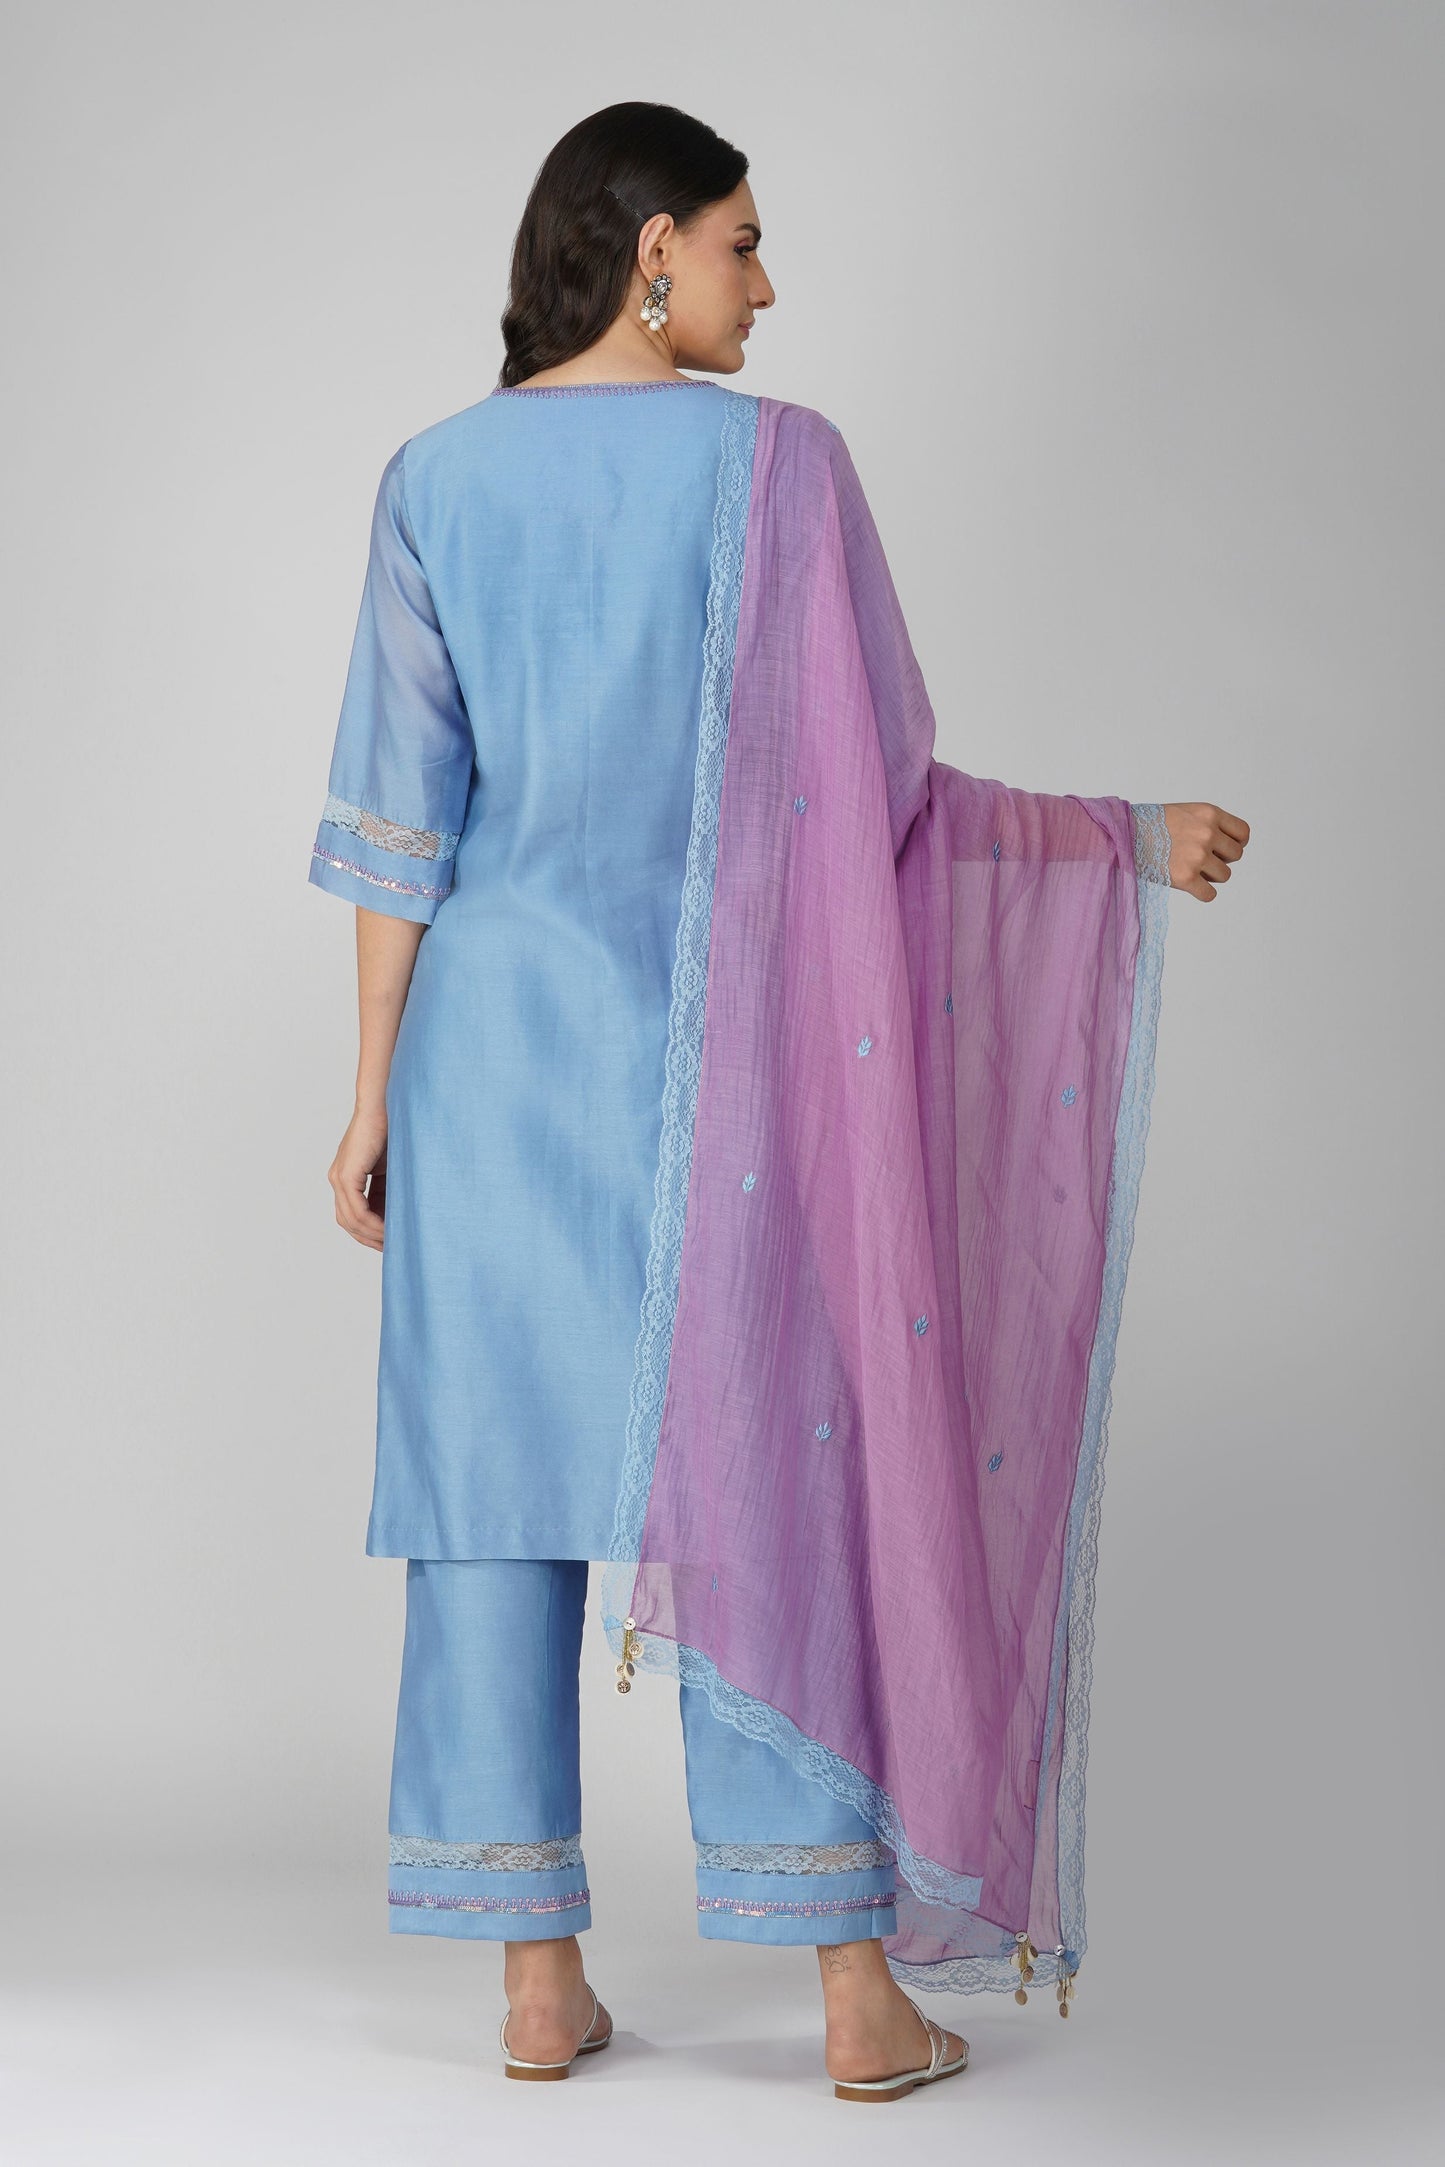 Blue Chanderi Kurta Pant Set at Kamakhyaa by Devyani Mehrotra. This item is Blue, Chanderi, Embellished, Indian Wear, Natural, Party Wear, Purple, Regular Fit, Womenswear